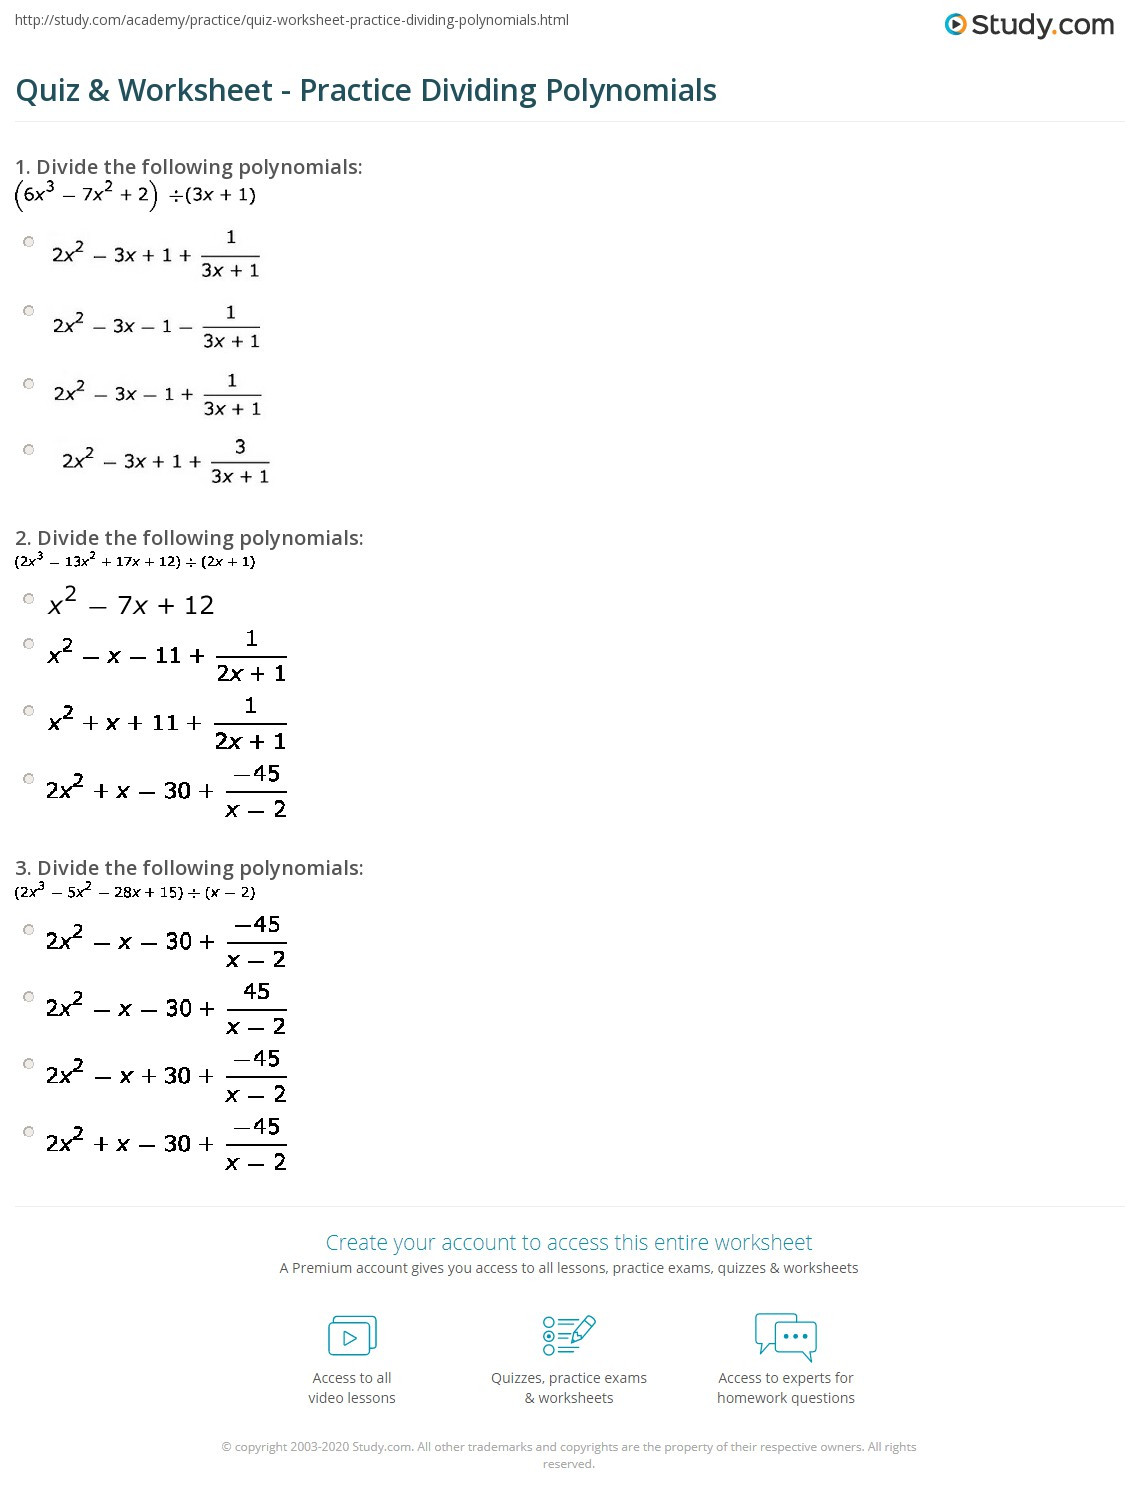 Dividing Polynomials Worksheet Answers Quiz &amp; Worksheet Practice Dividing Polynomials